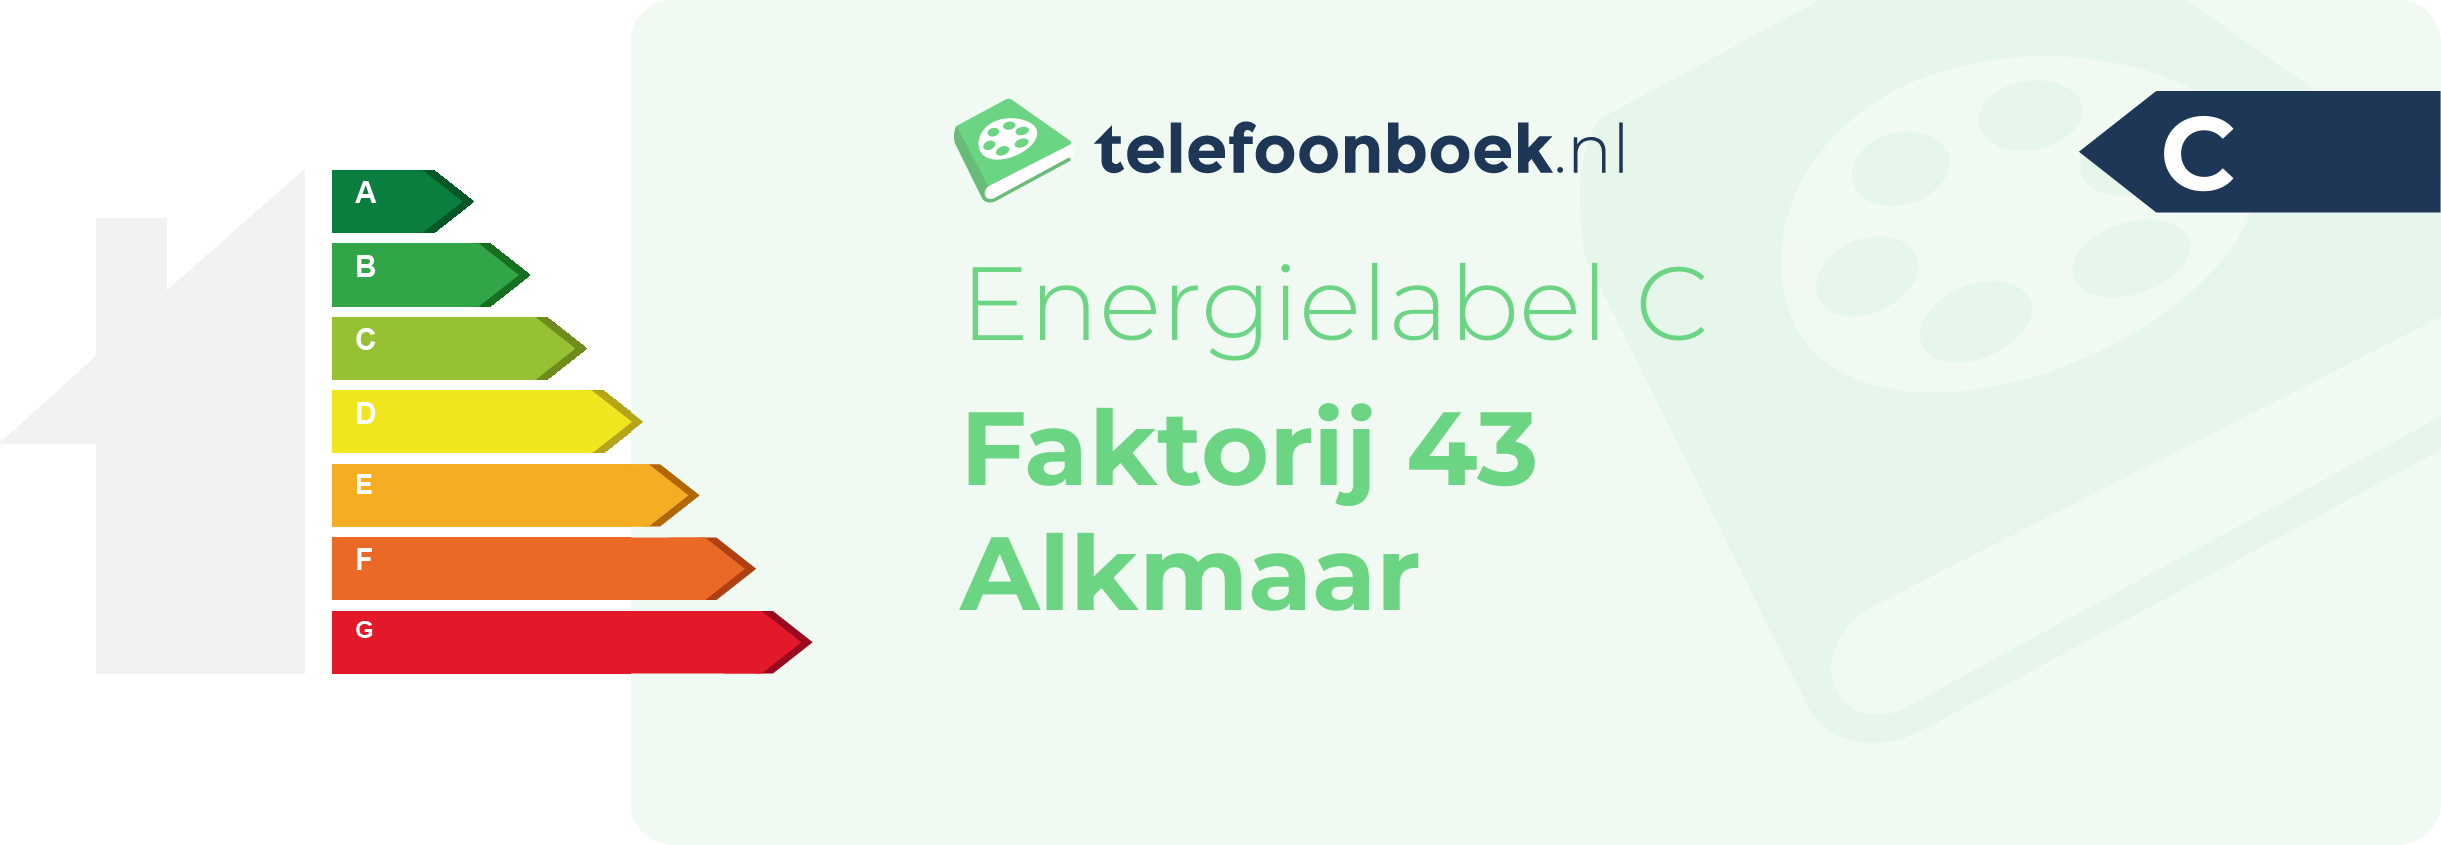 Energielabel Faktorij 43 Alkmaar